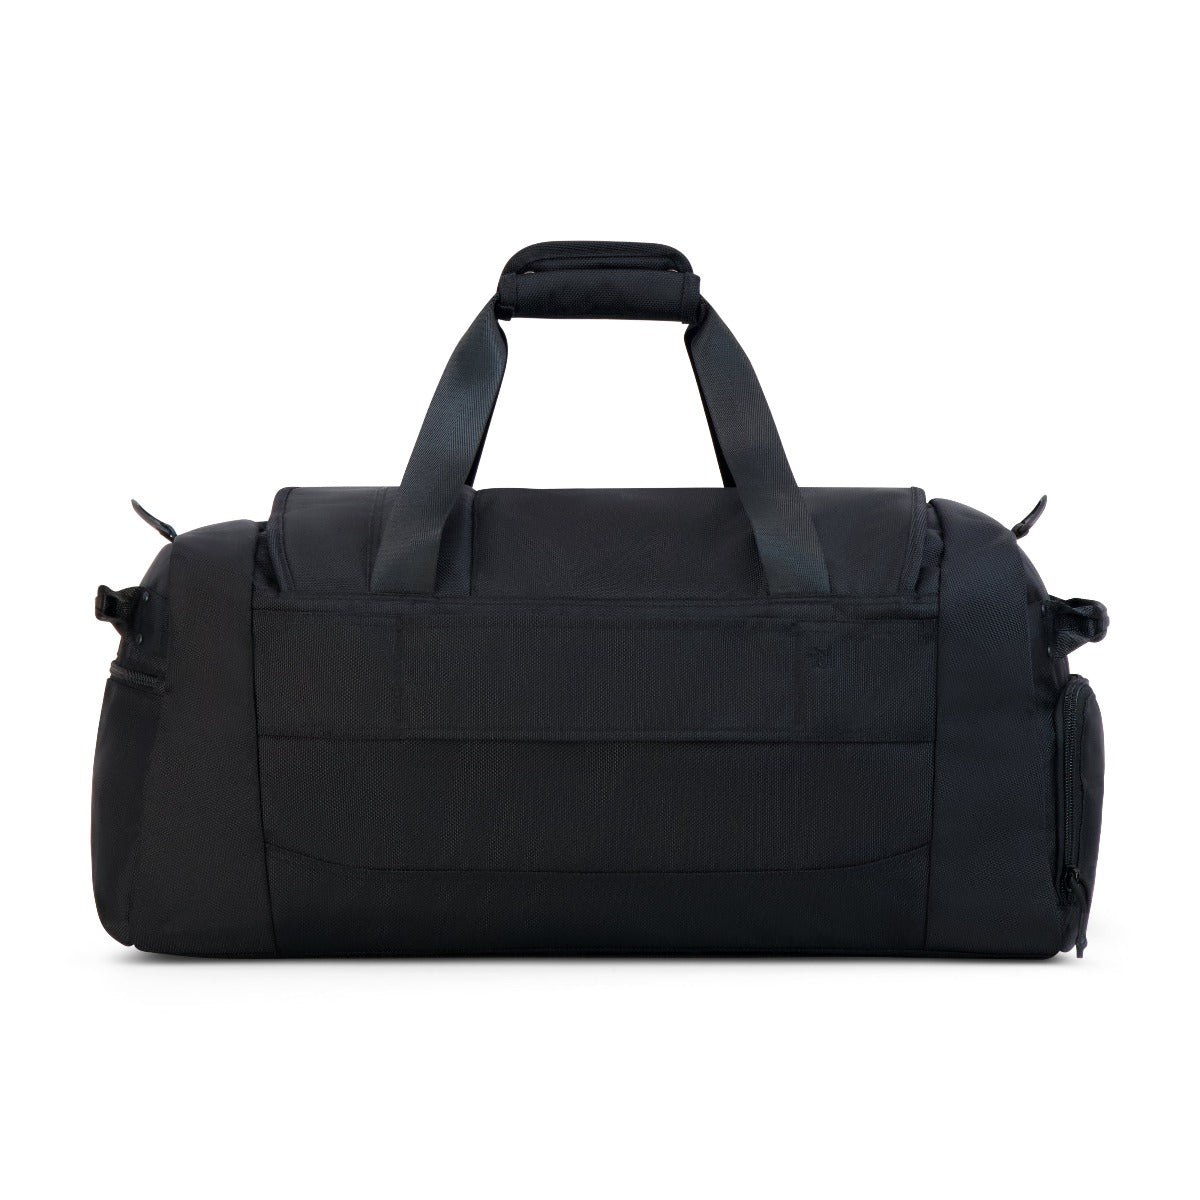 ful tactics collection siege duffle bag black - best gym duffel bags